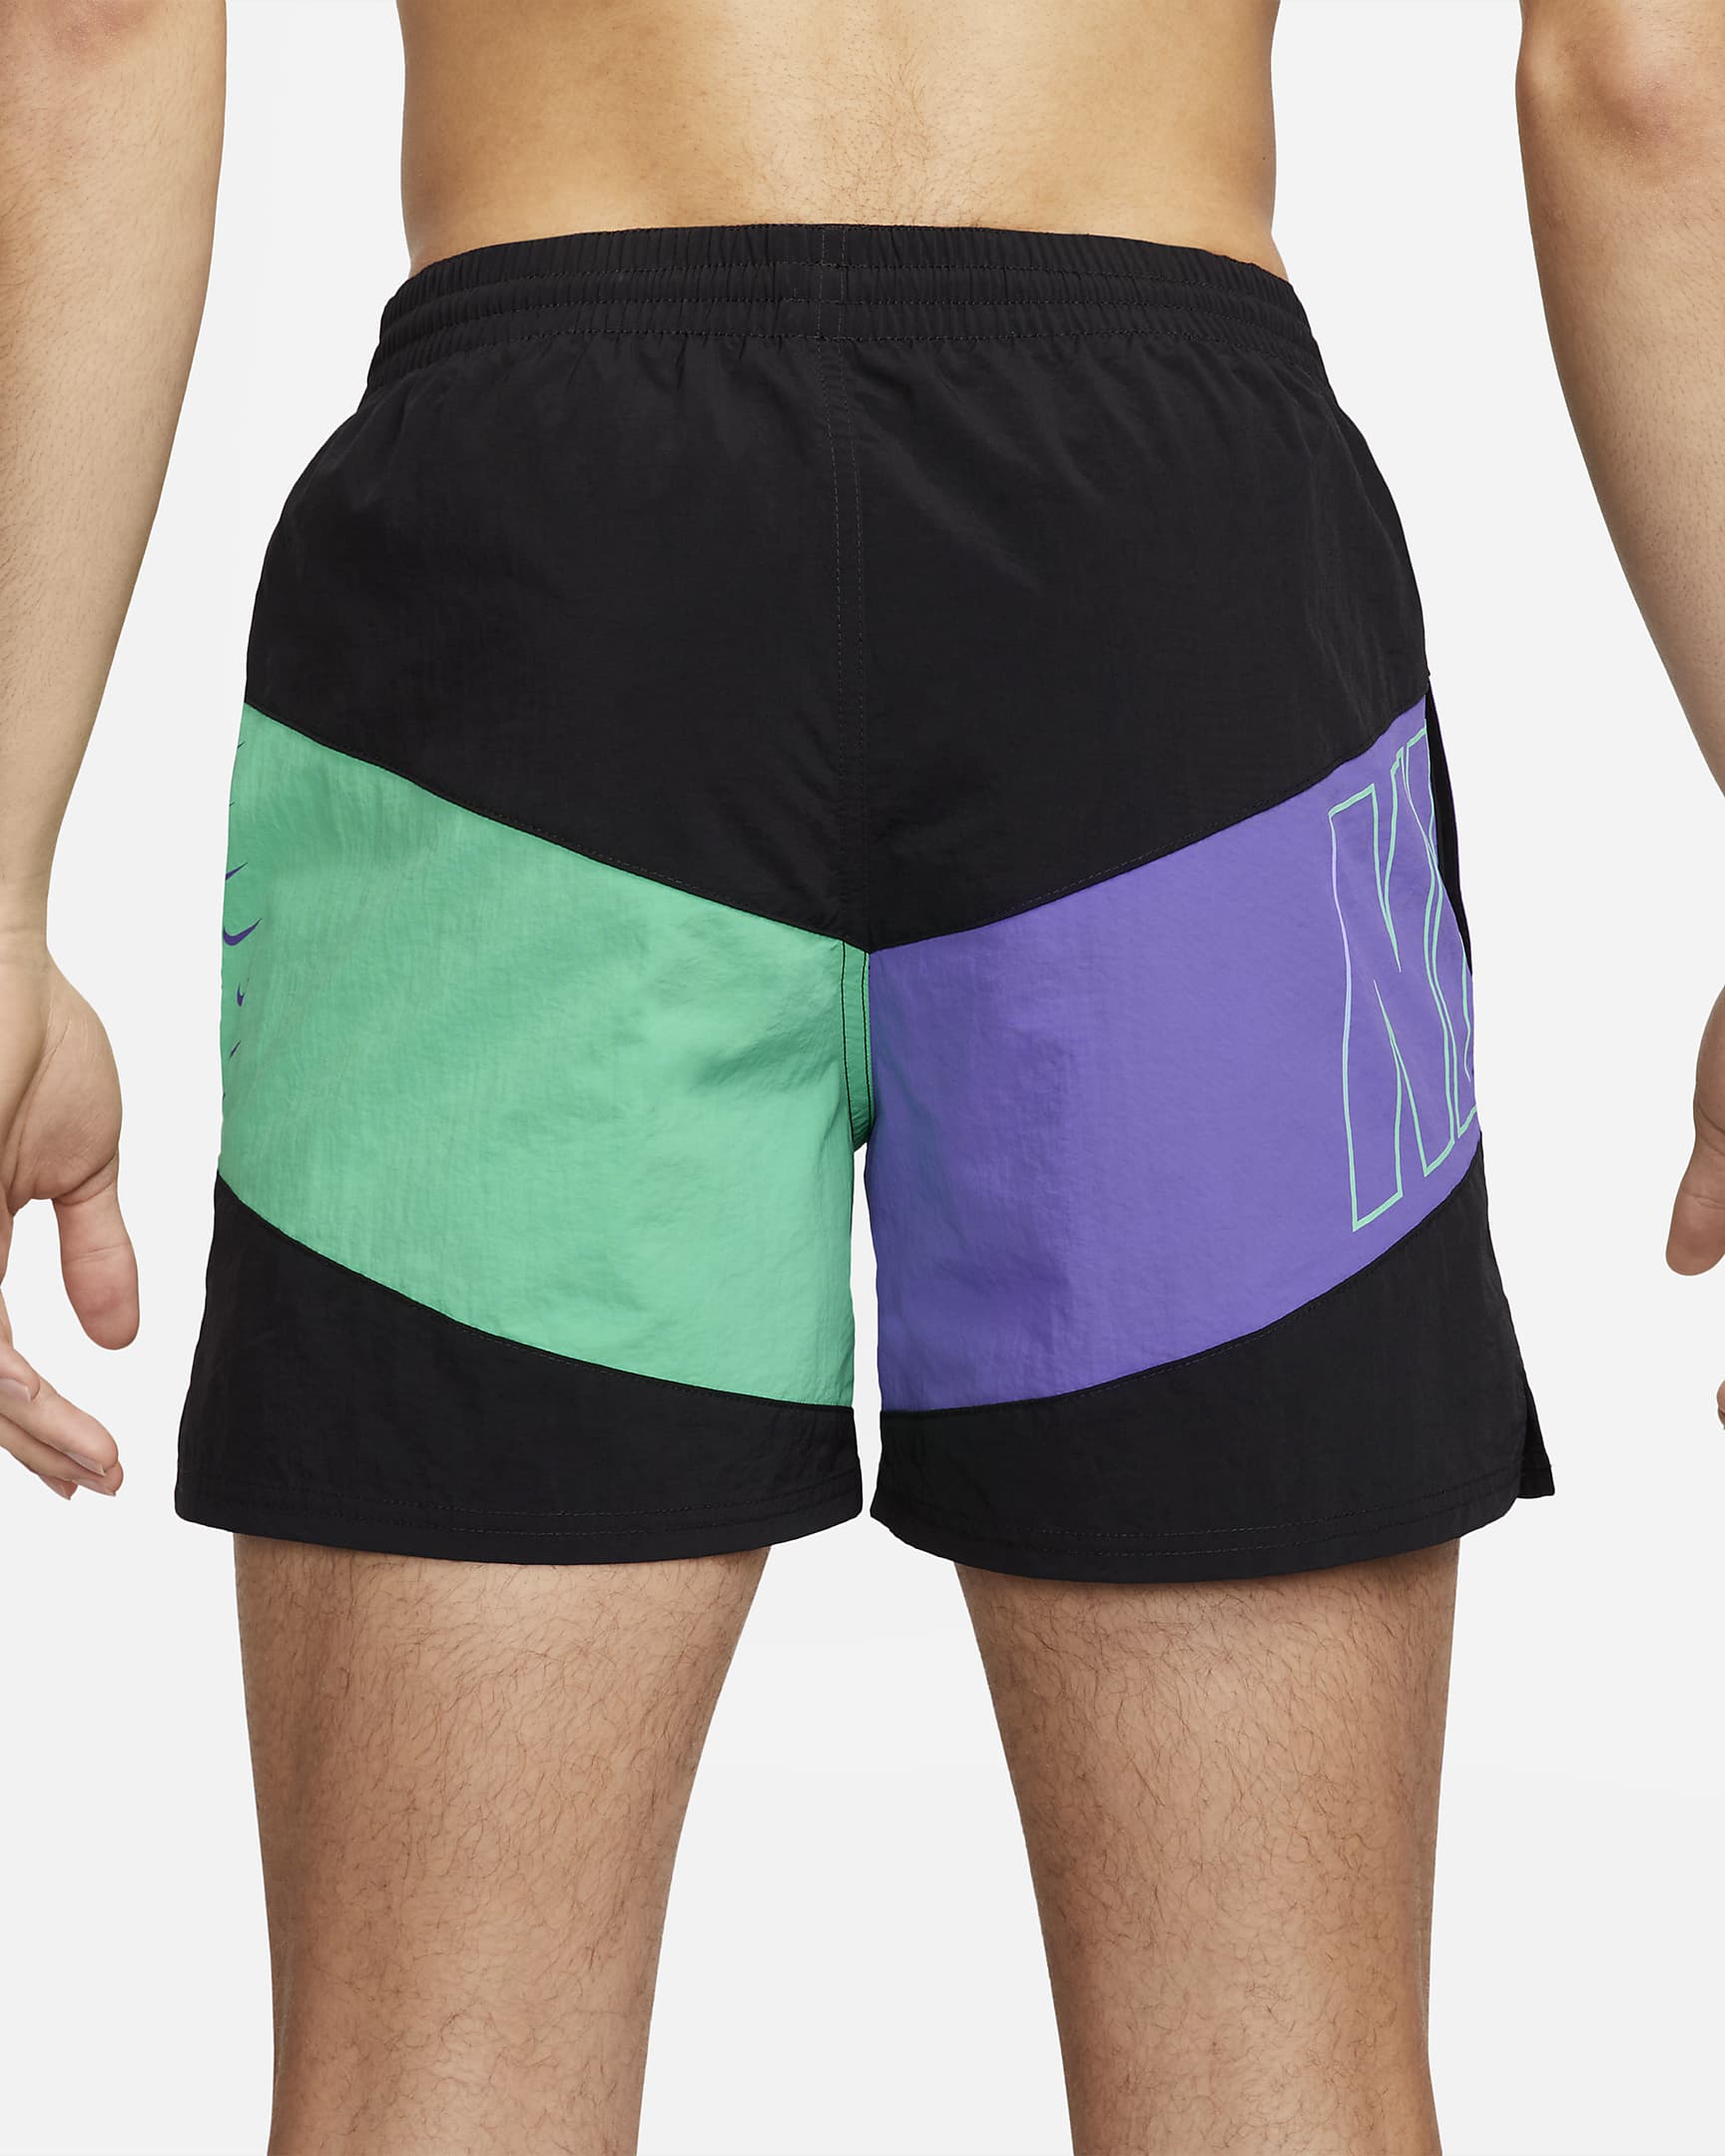 Men's 13cm (approx.) Volley Swimming Shorts - Black/Action Grape/Electric Algae/Black